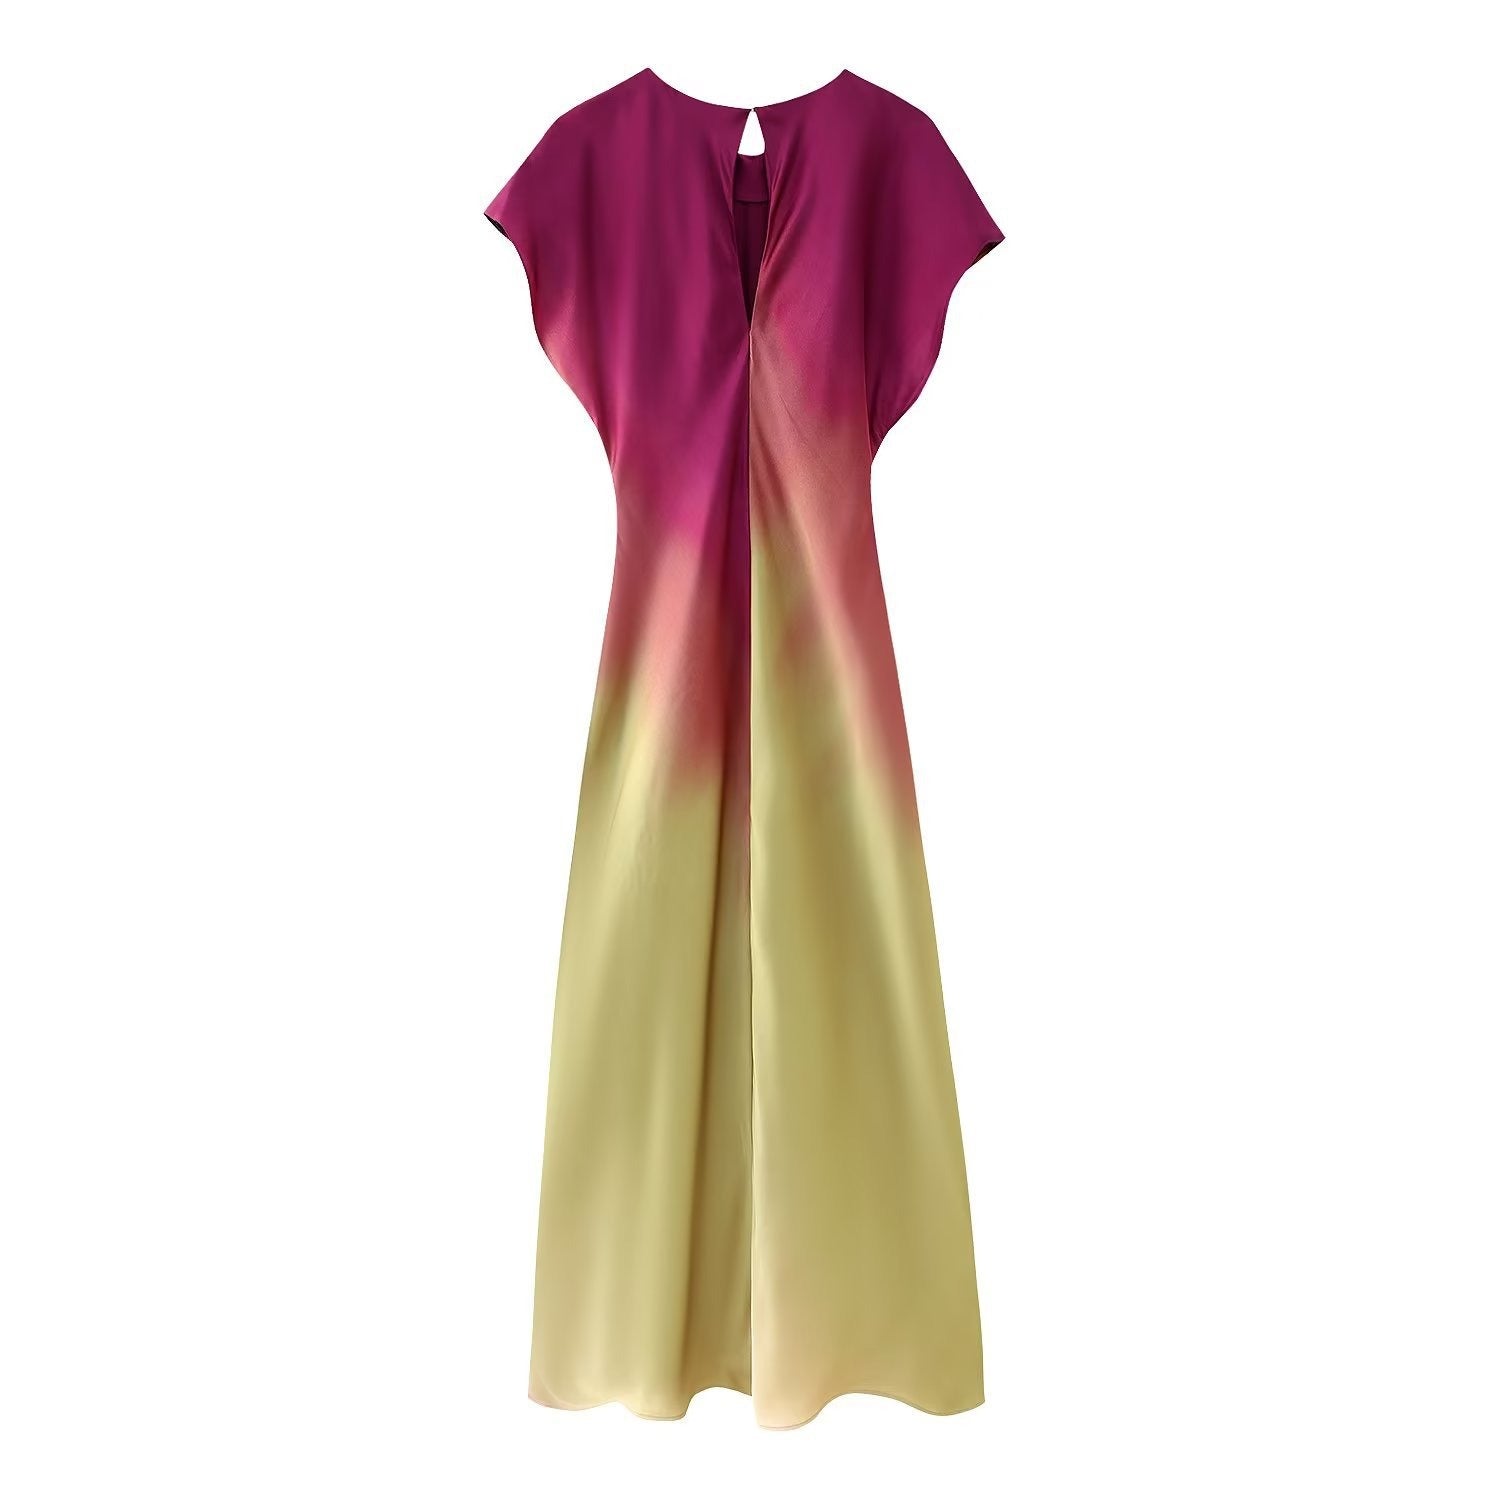 Tye Dye A Line Dress - Kelly Obi New York